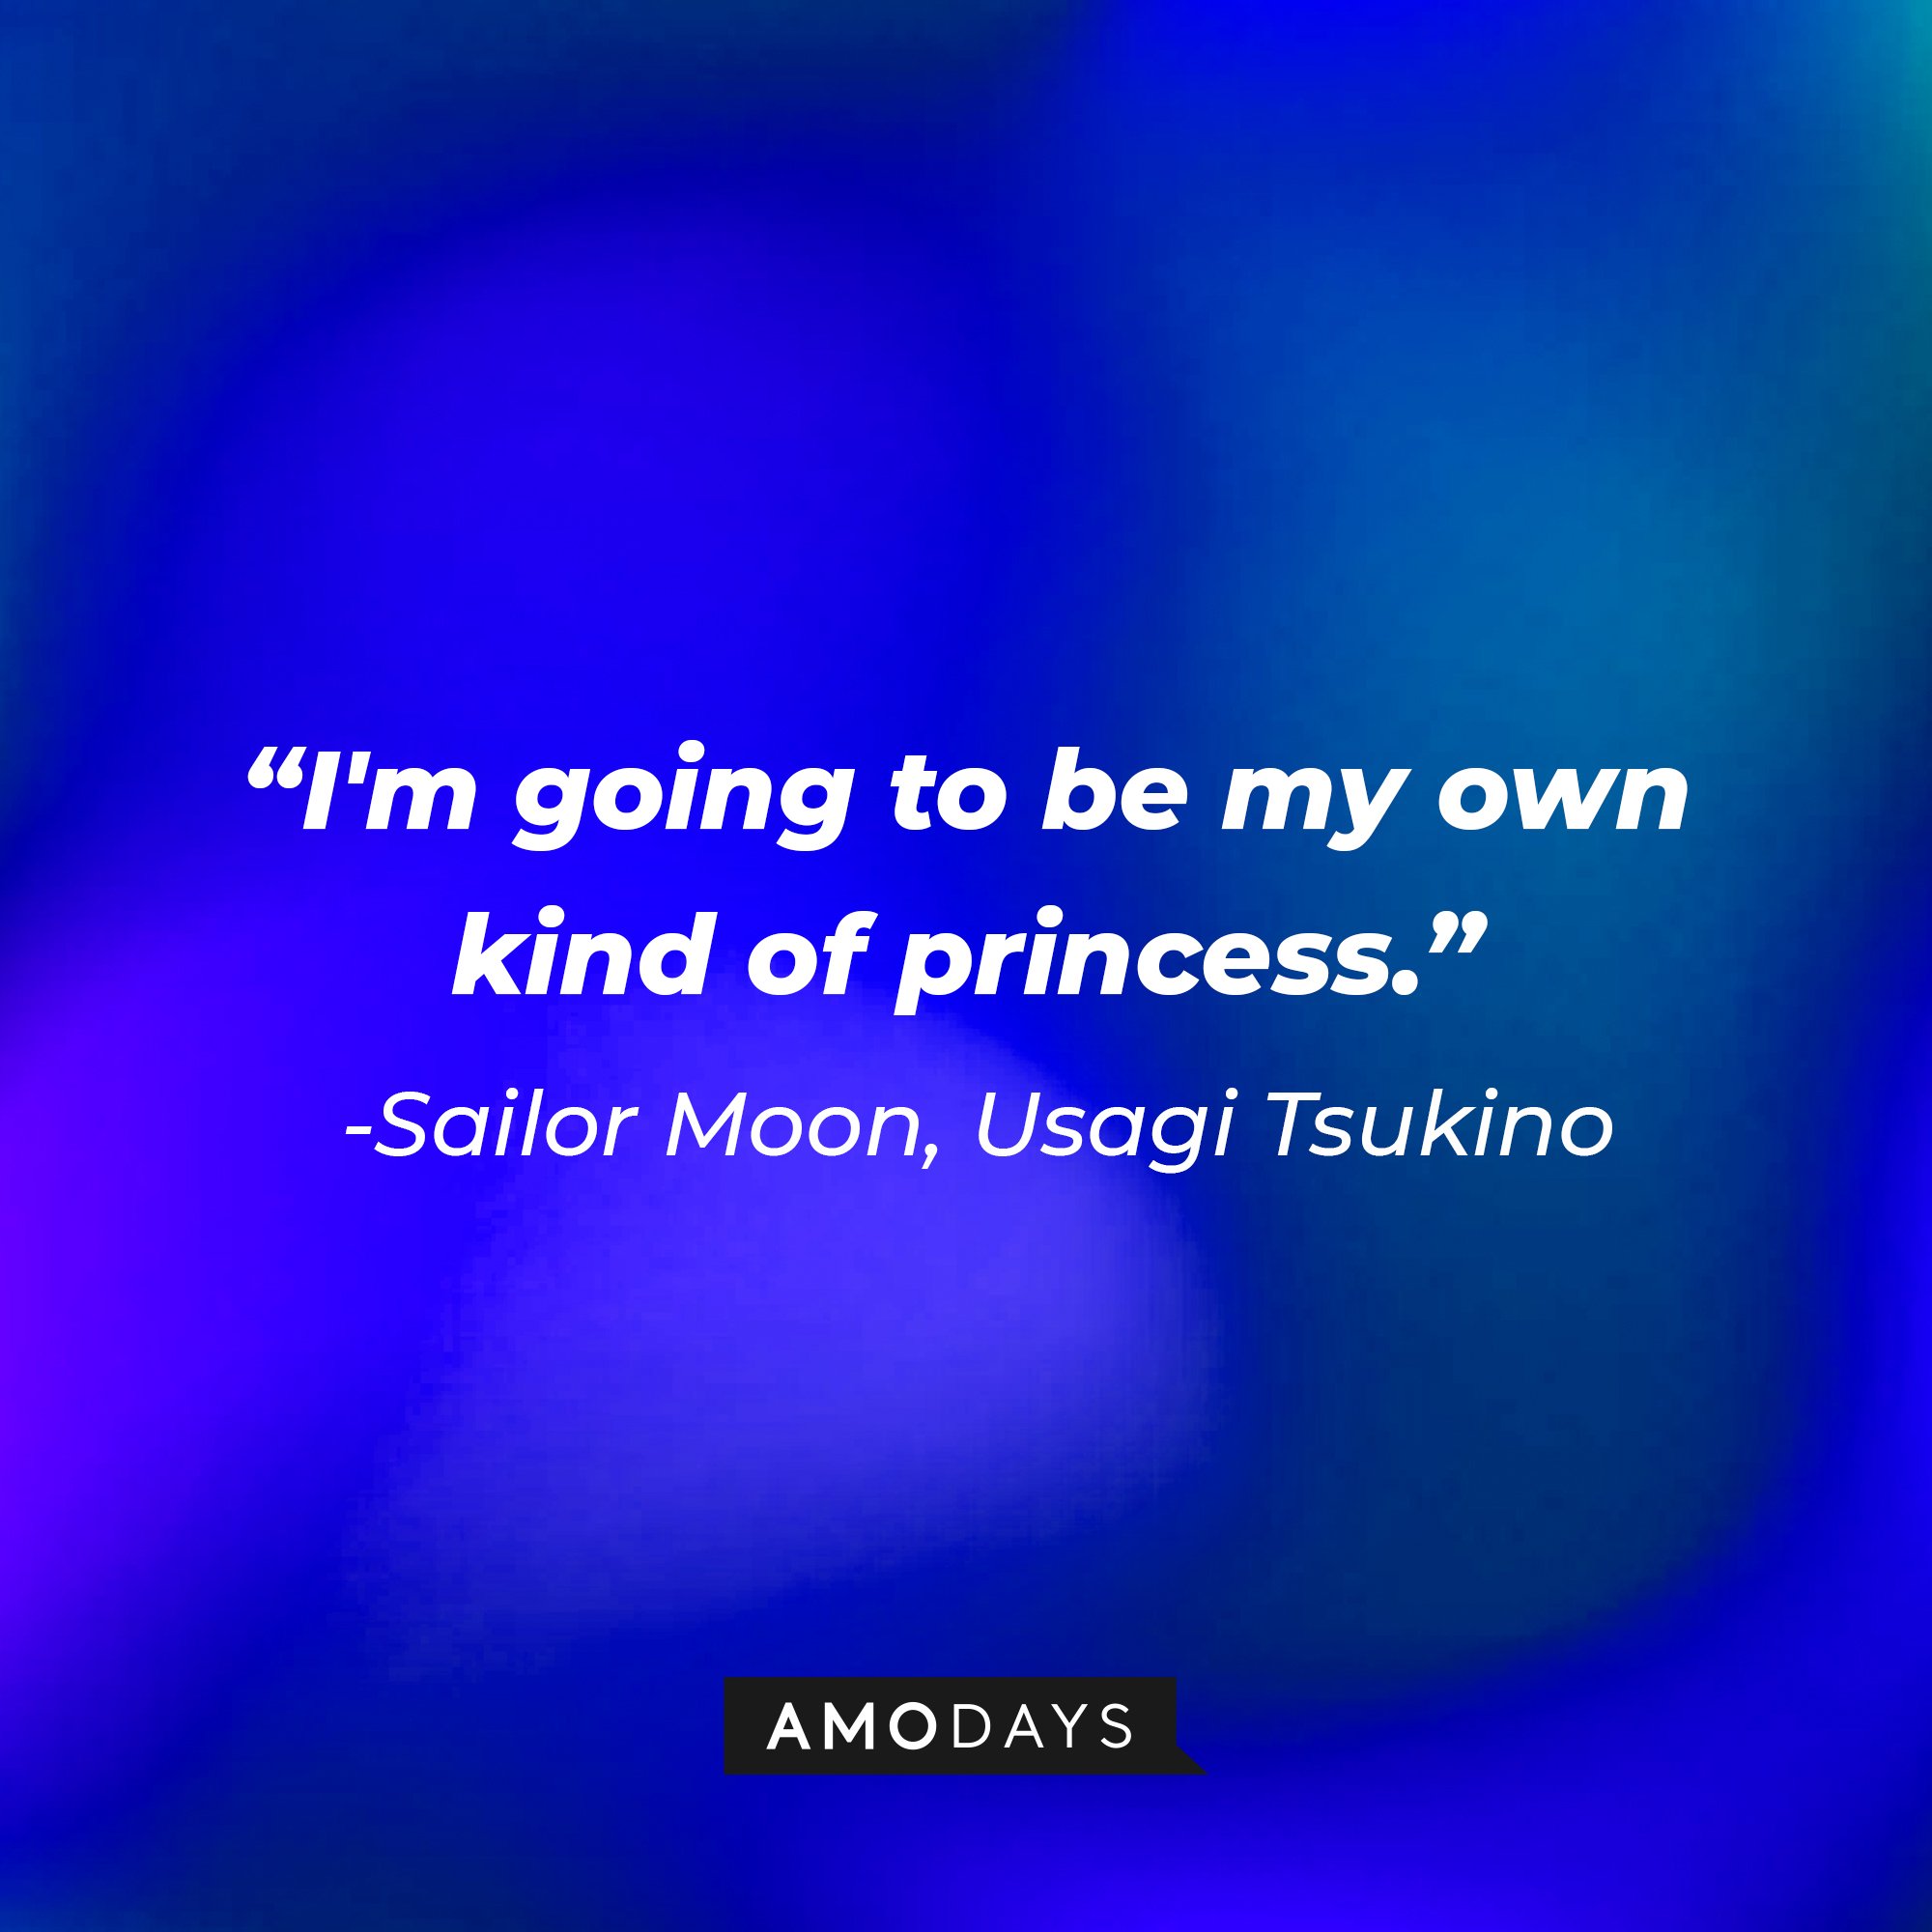 Sailor Moon/Usagi Tsukino’s quote: "I'm going to be my own kind of princess." Image: AmoDays